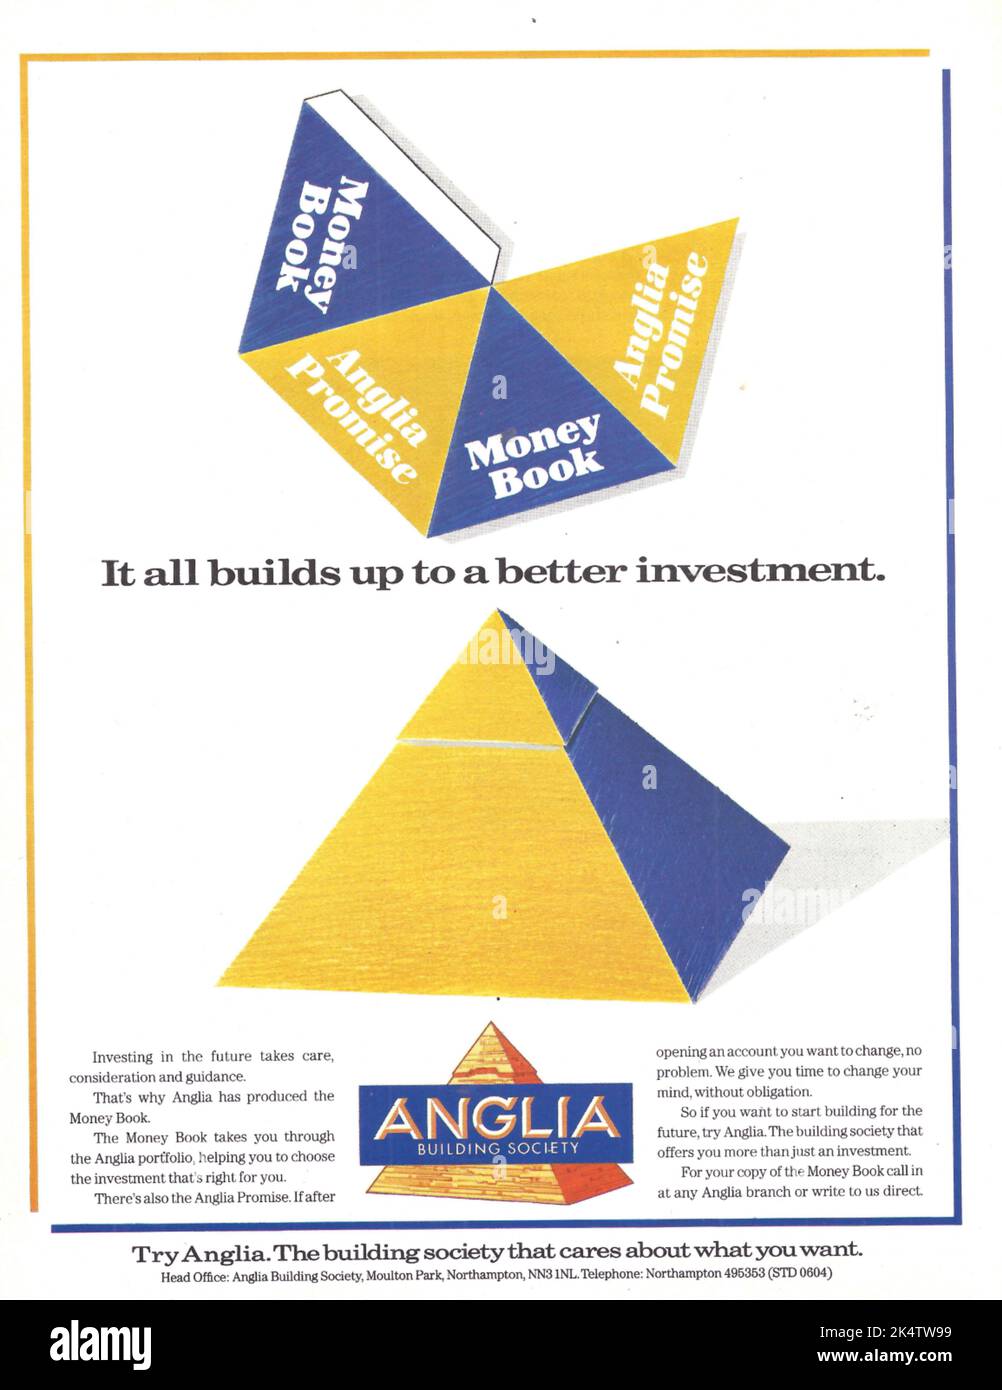 bank financial institution advertisement bank magazine advert 1980s 1970s Stock Photo